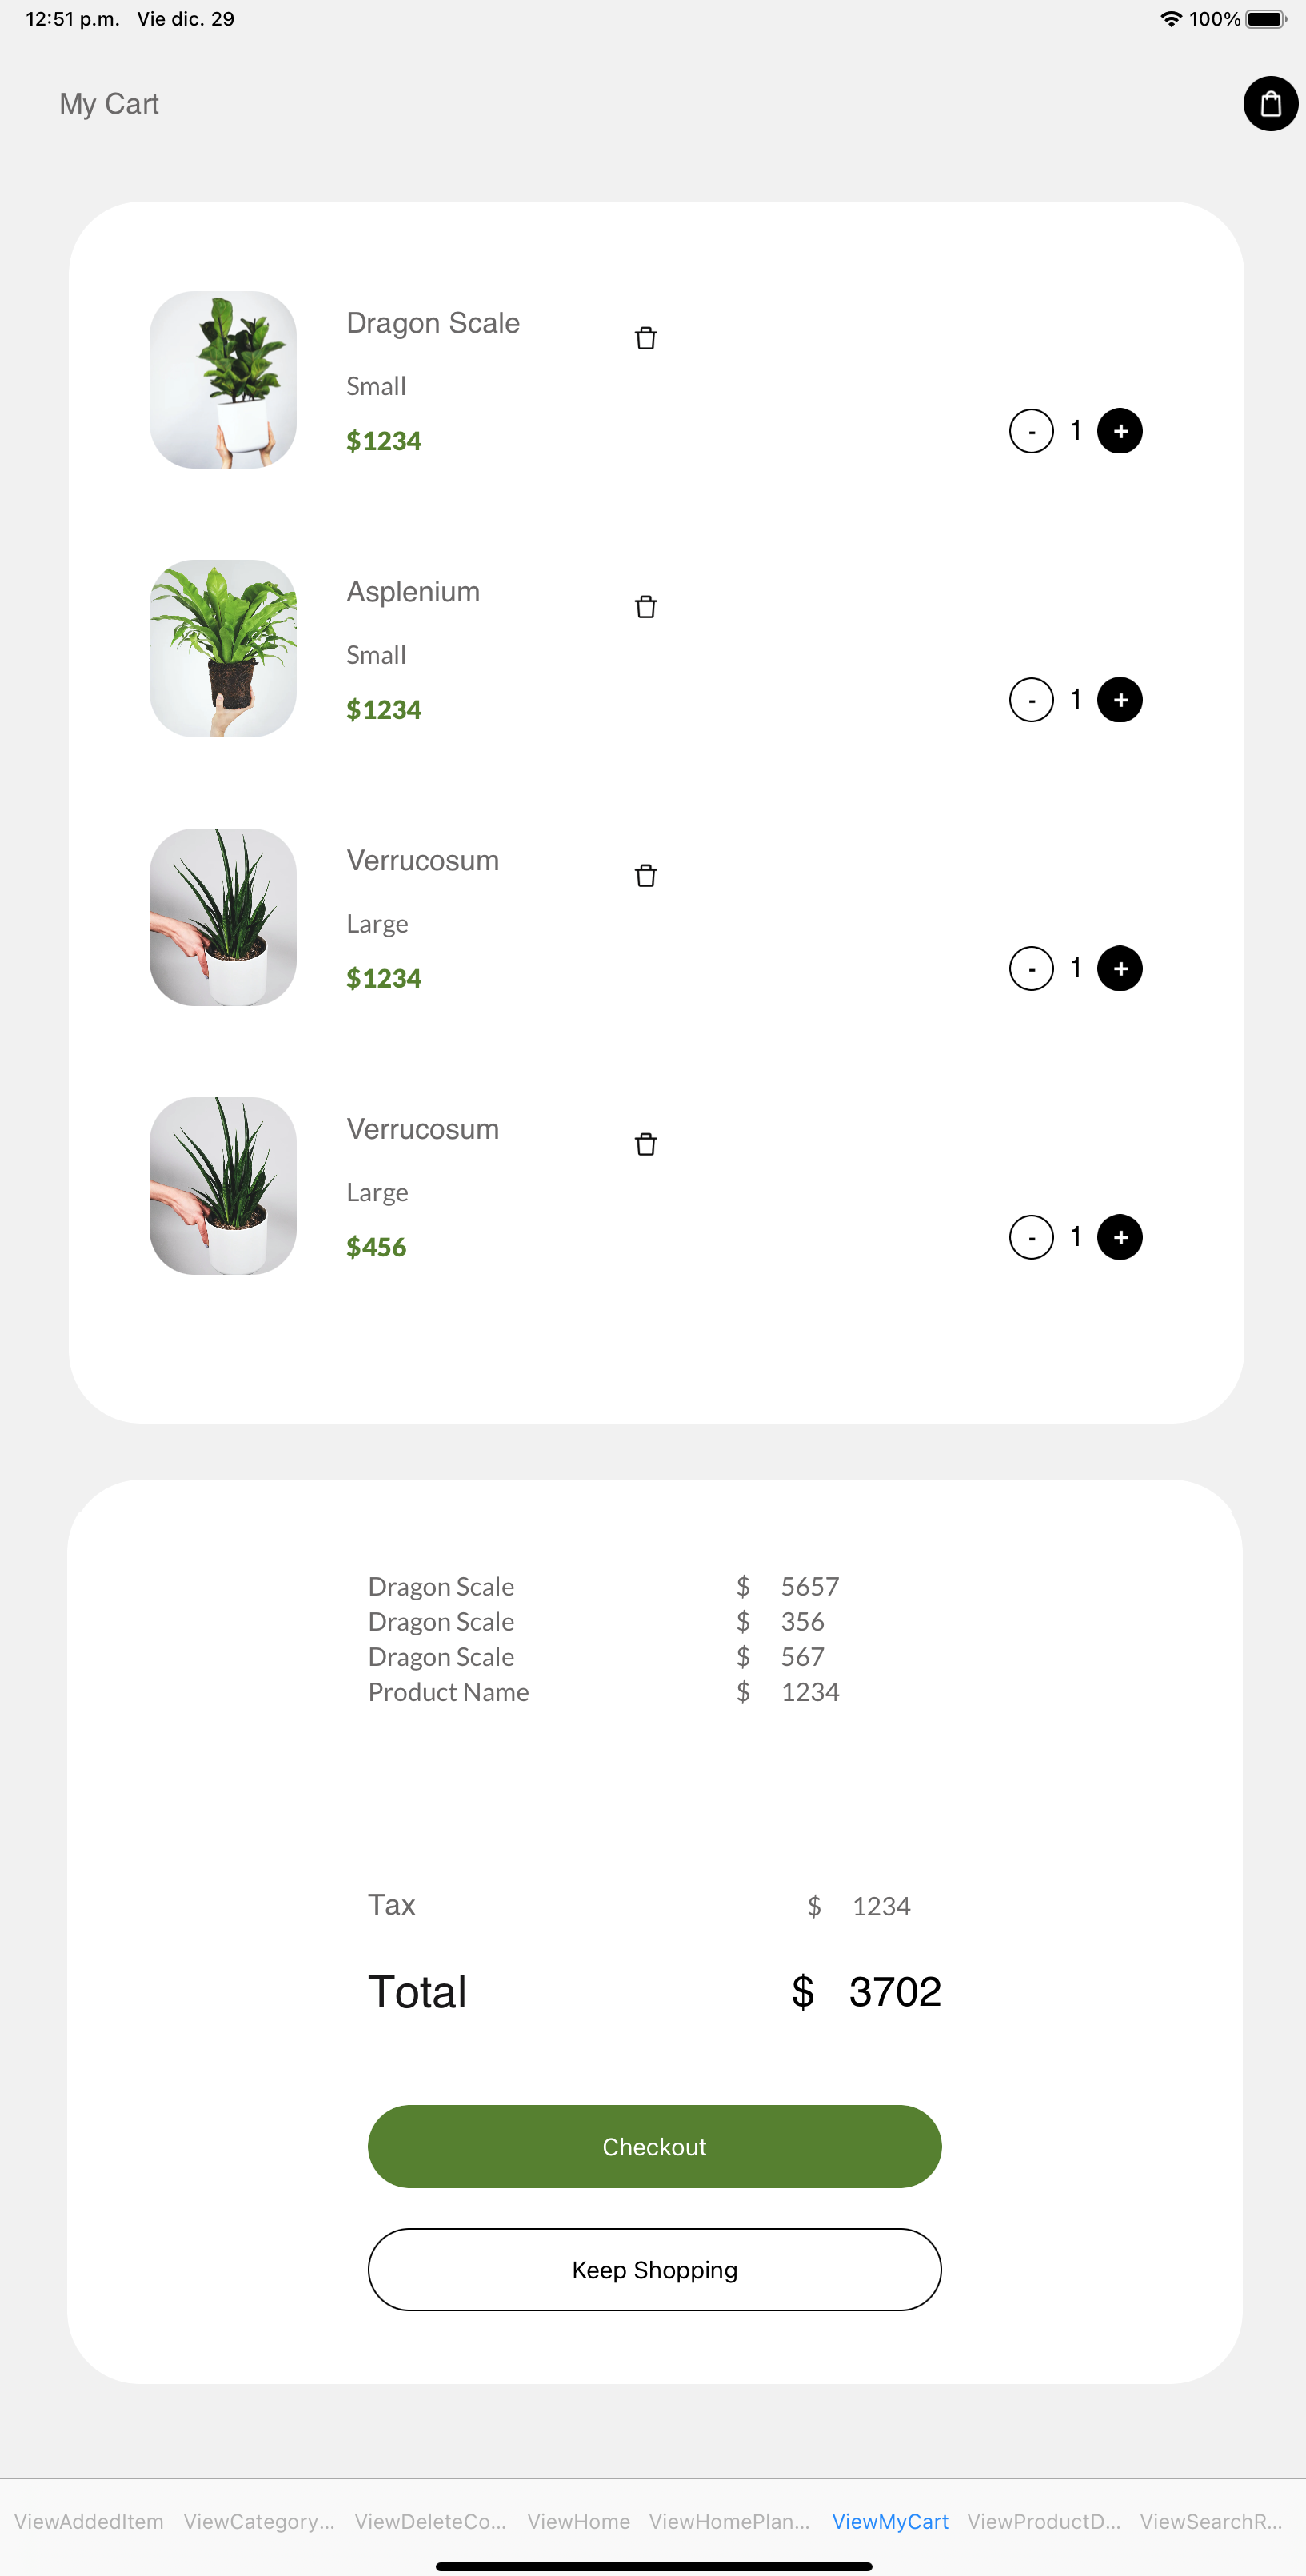 PlantCare - iPad - ViewMyCart